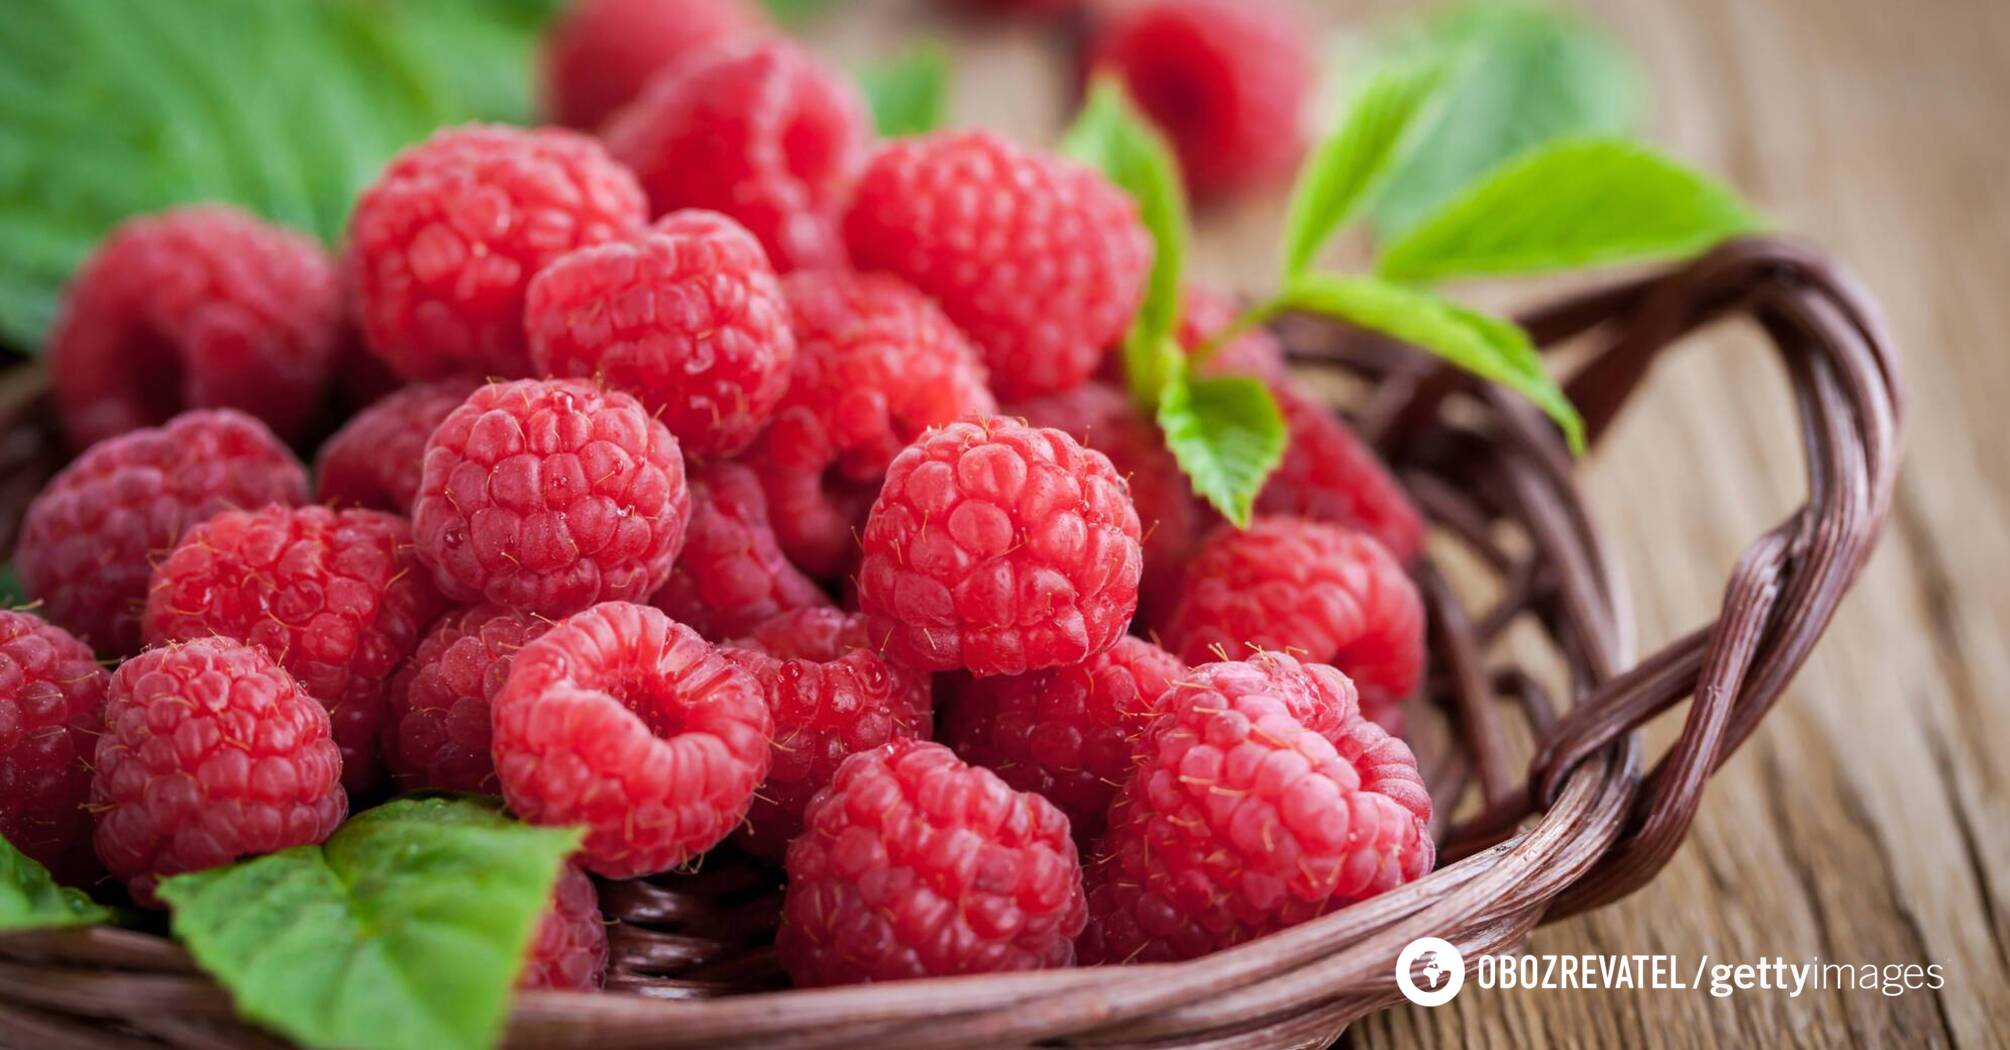 Raspberries support heart health